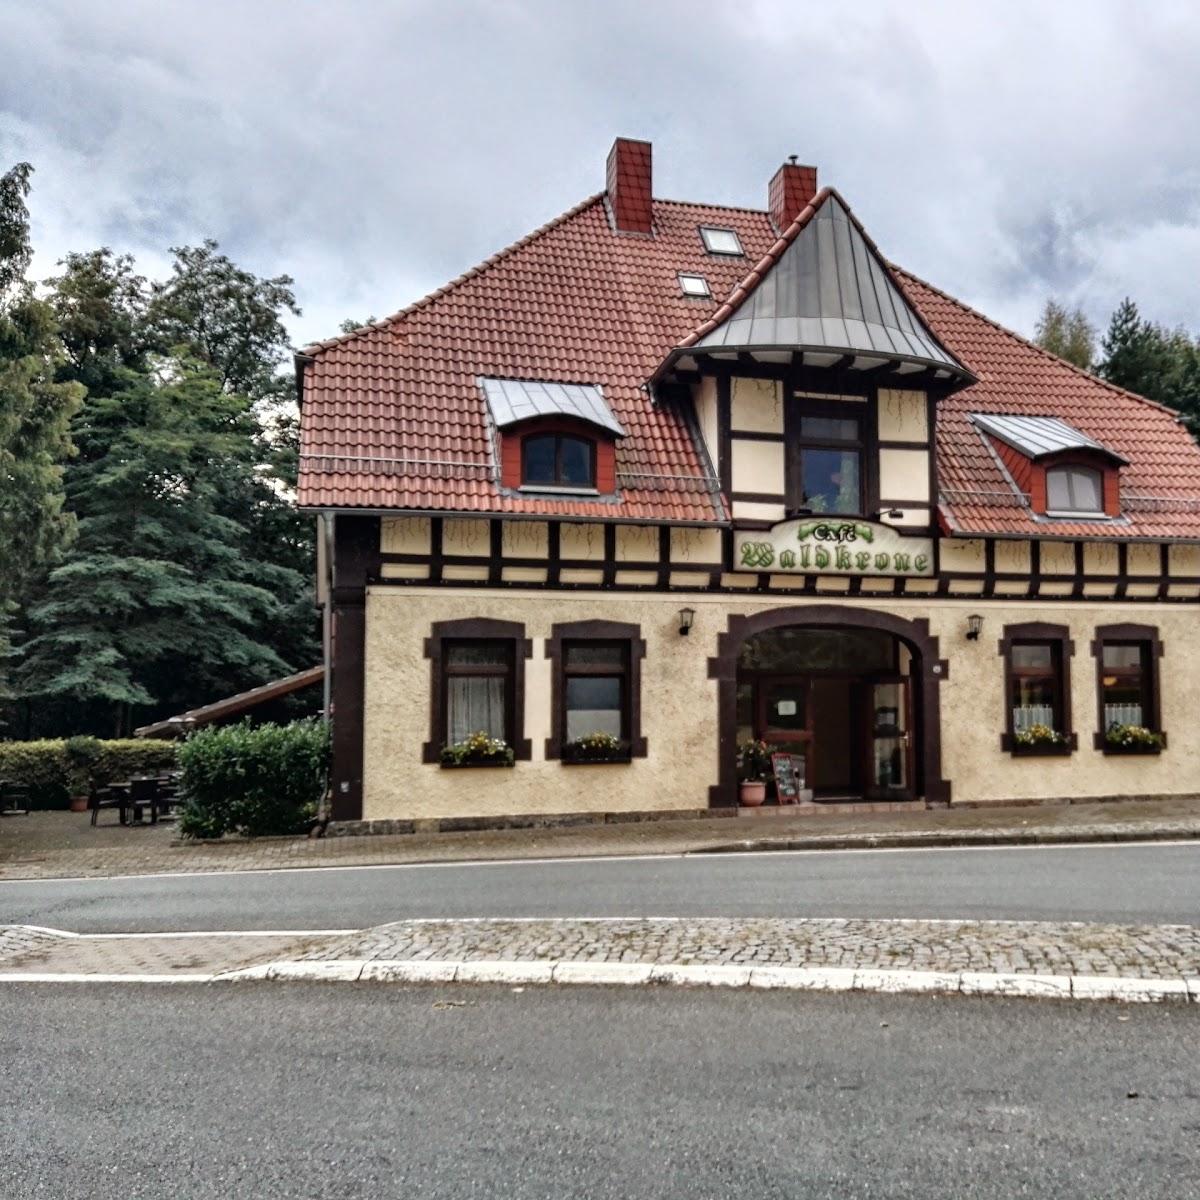 Restaurant "Restaurant Amphora" in  Wunstorf